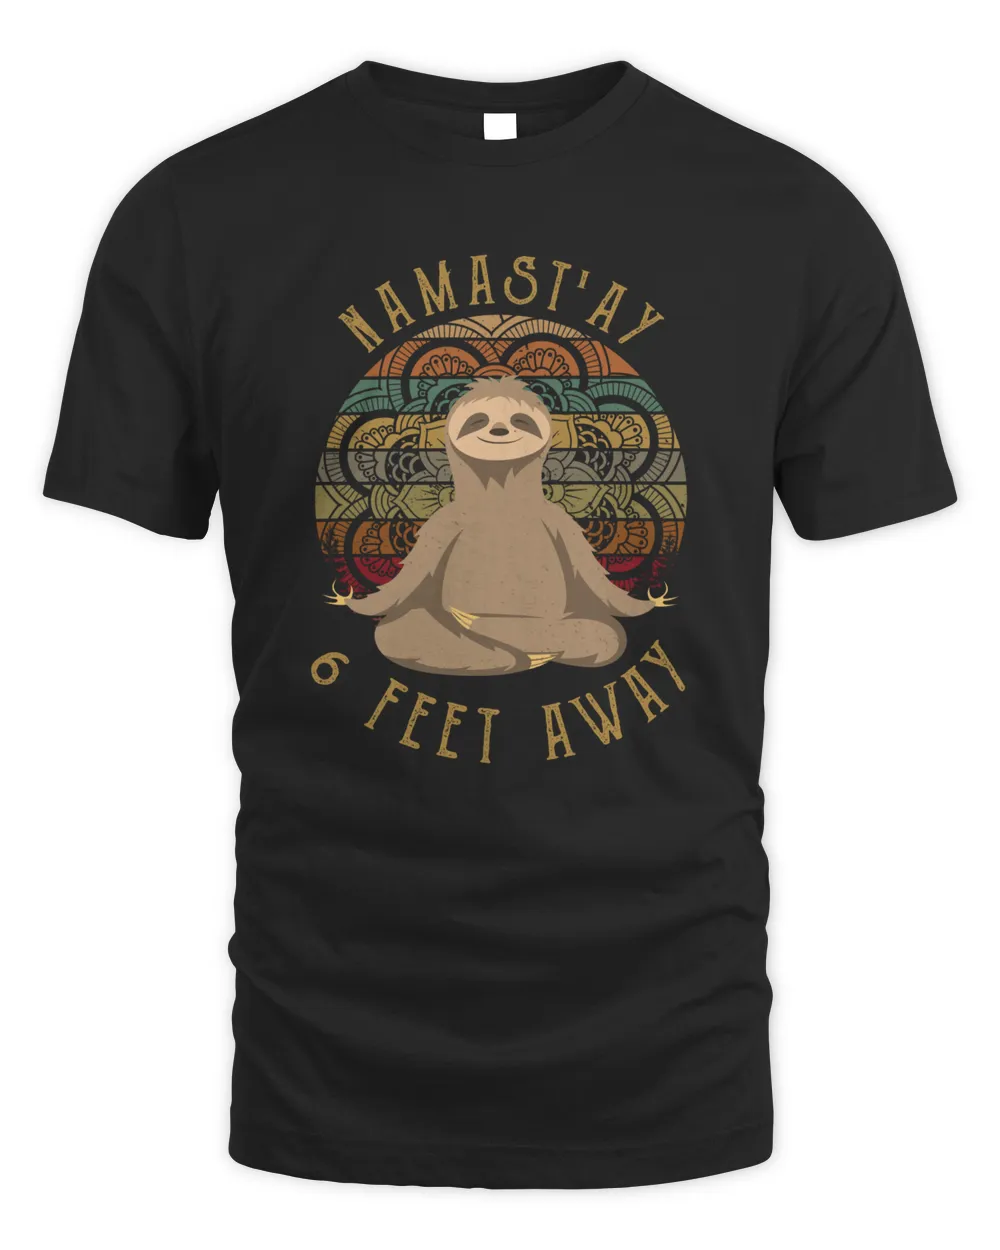 Namastay 6 feet away sloth shirt